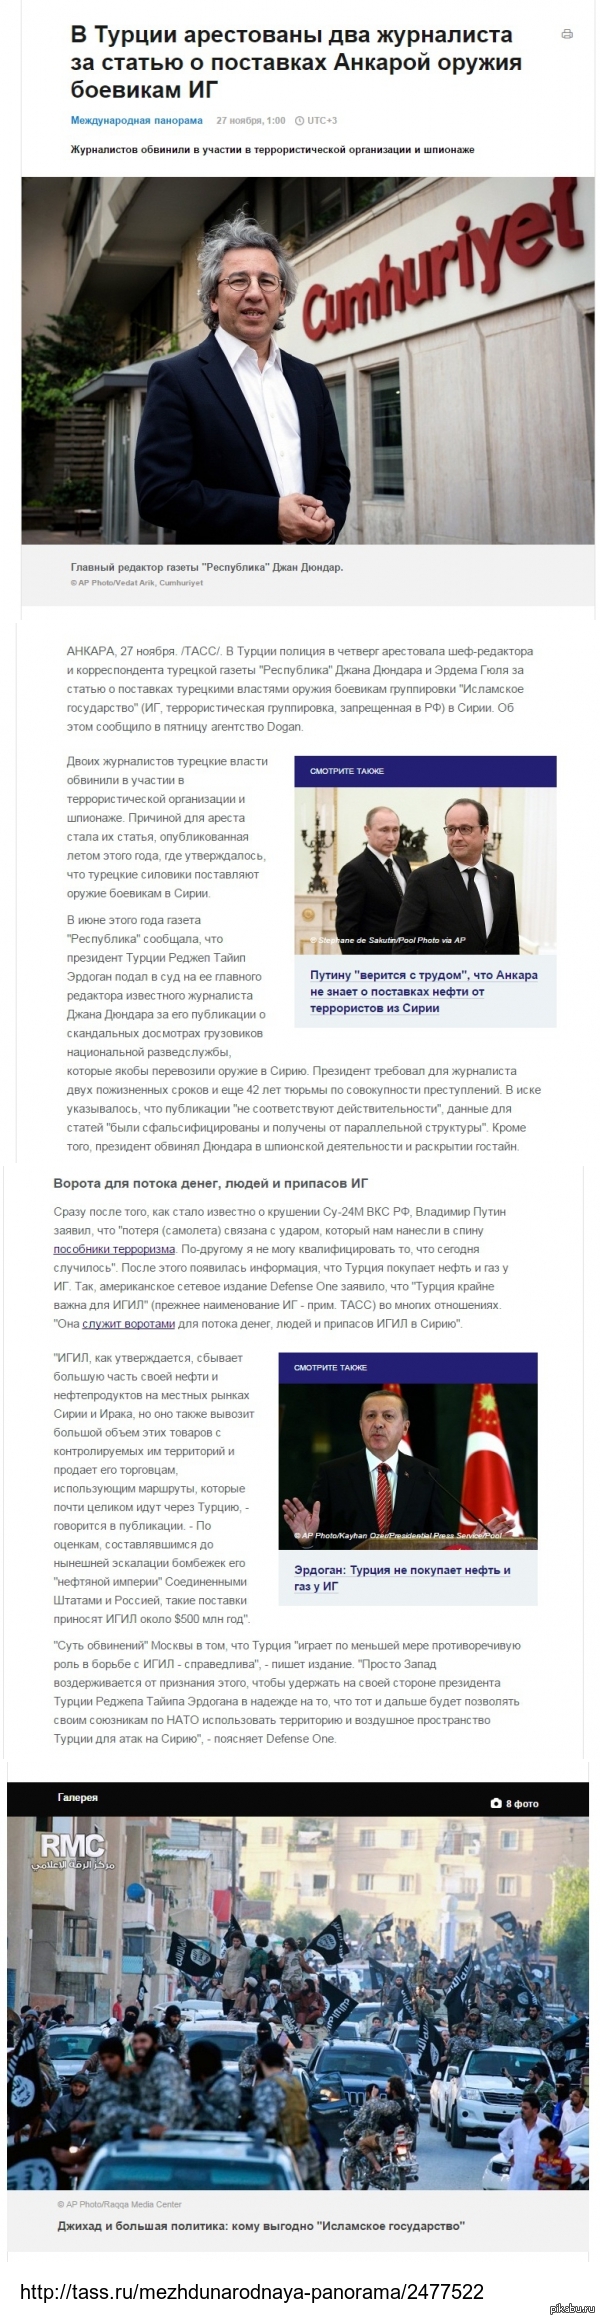              http://tass.ru/mezhdunarodnaya-panorama/2477522             https://news.yandex.ru/yandsearch?cl4url=www.rg.ru/2015/11/27/jurnalisti-site-anons.html&amp;lang=ru